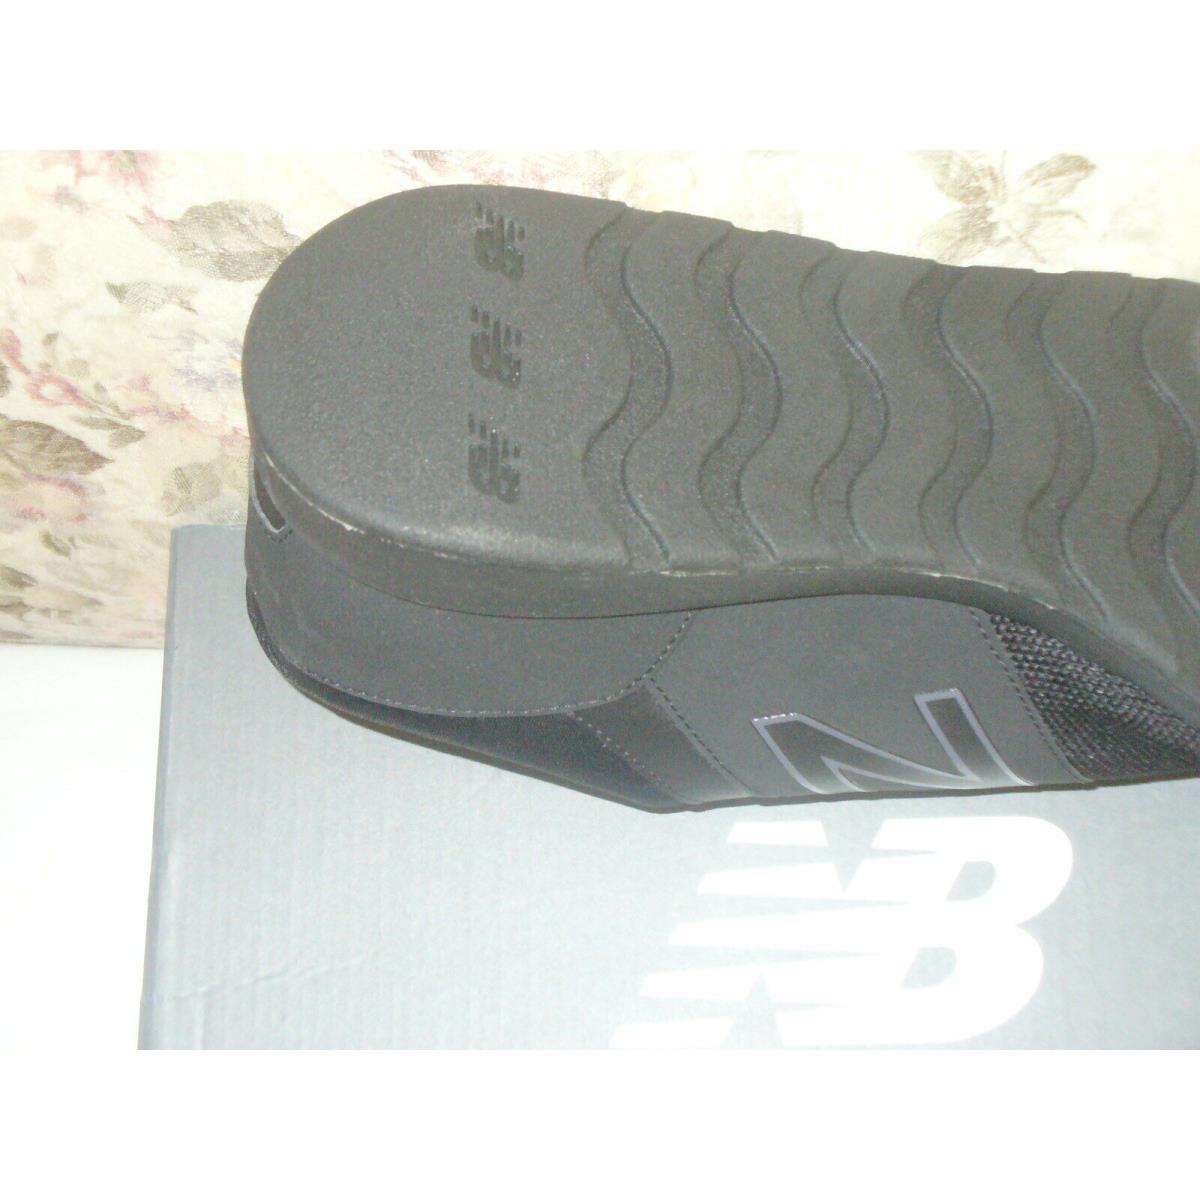 New Balance shoes  - Black 5